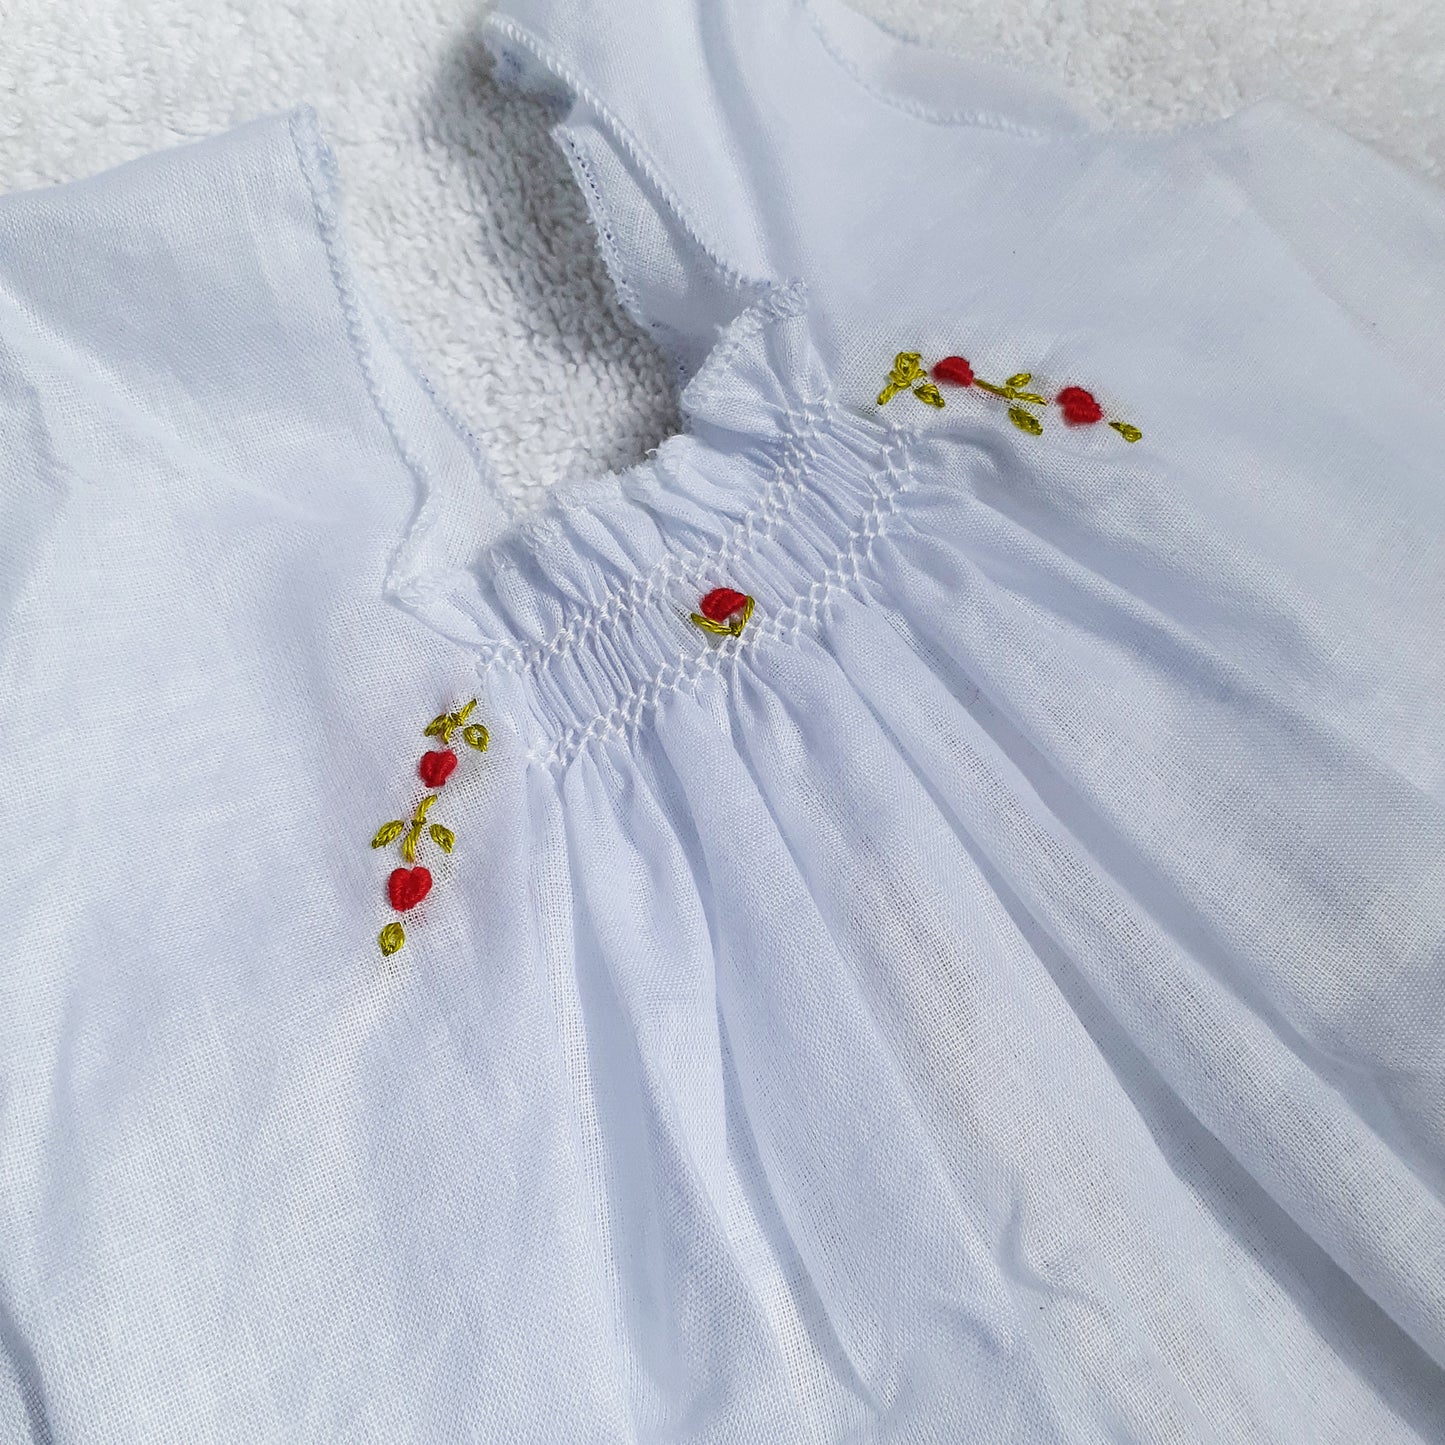 Handmade Smocked Newborn Dress Collection - 0 to 3 months